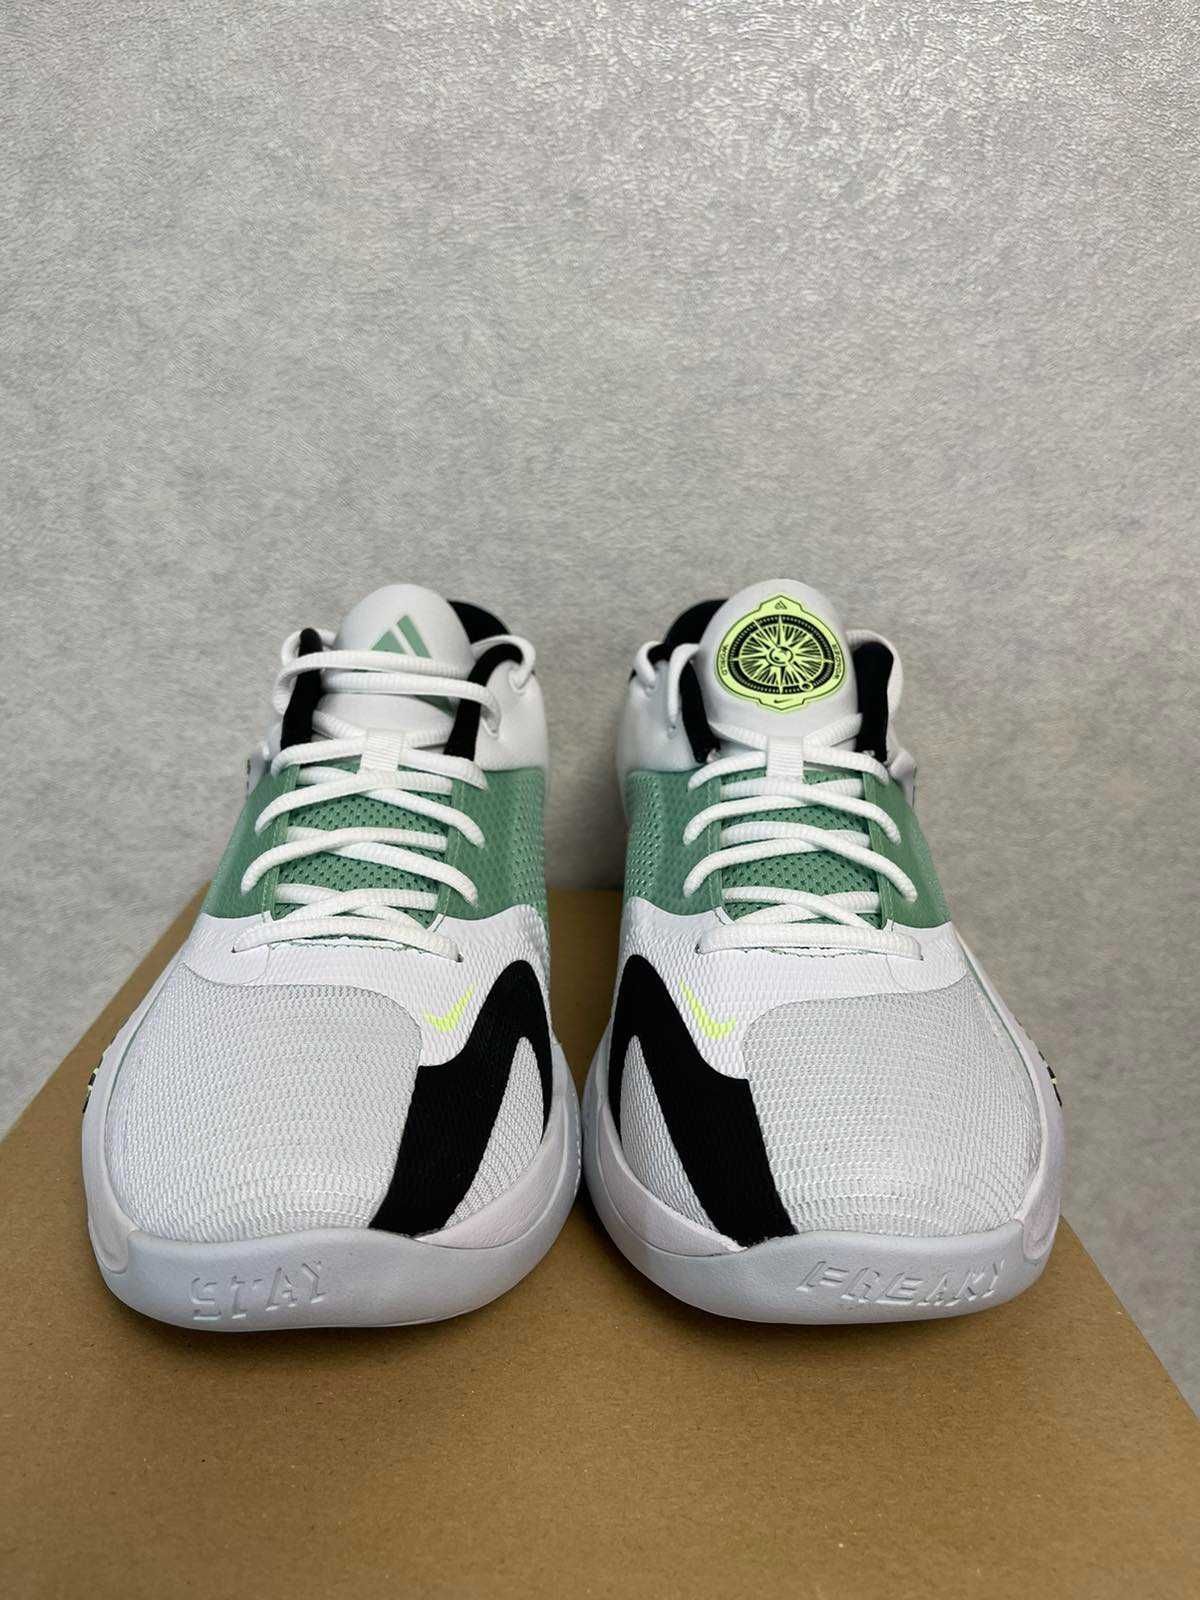 Nike Freak 4 [US 8.5 / 26.5 cm]
НОВЫЕ